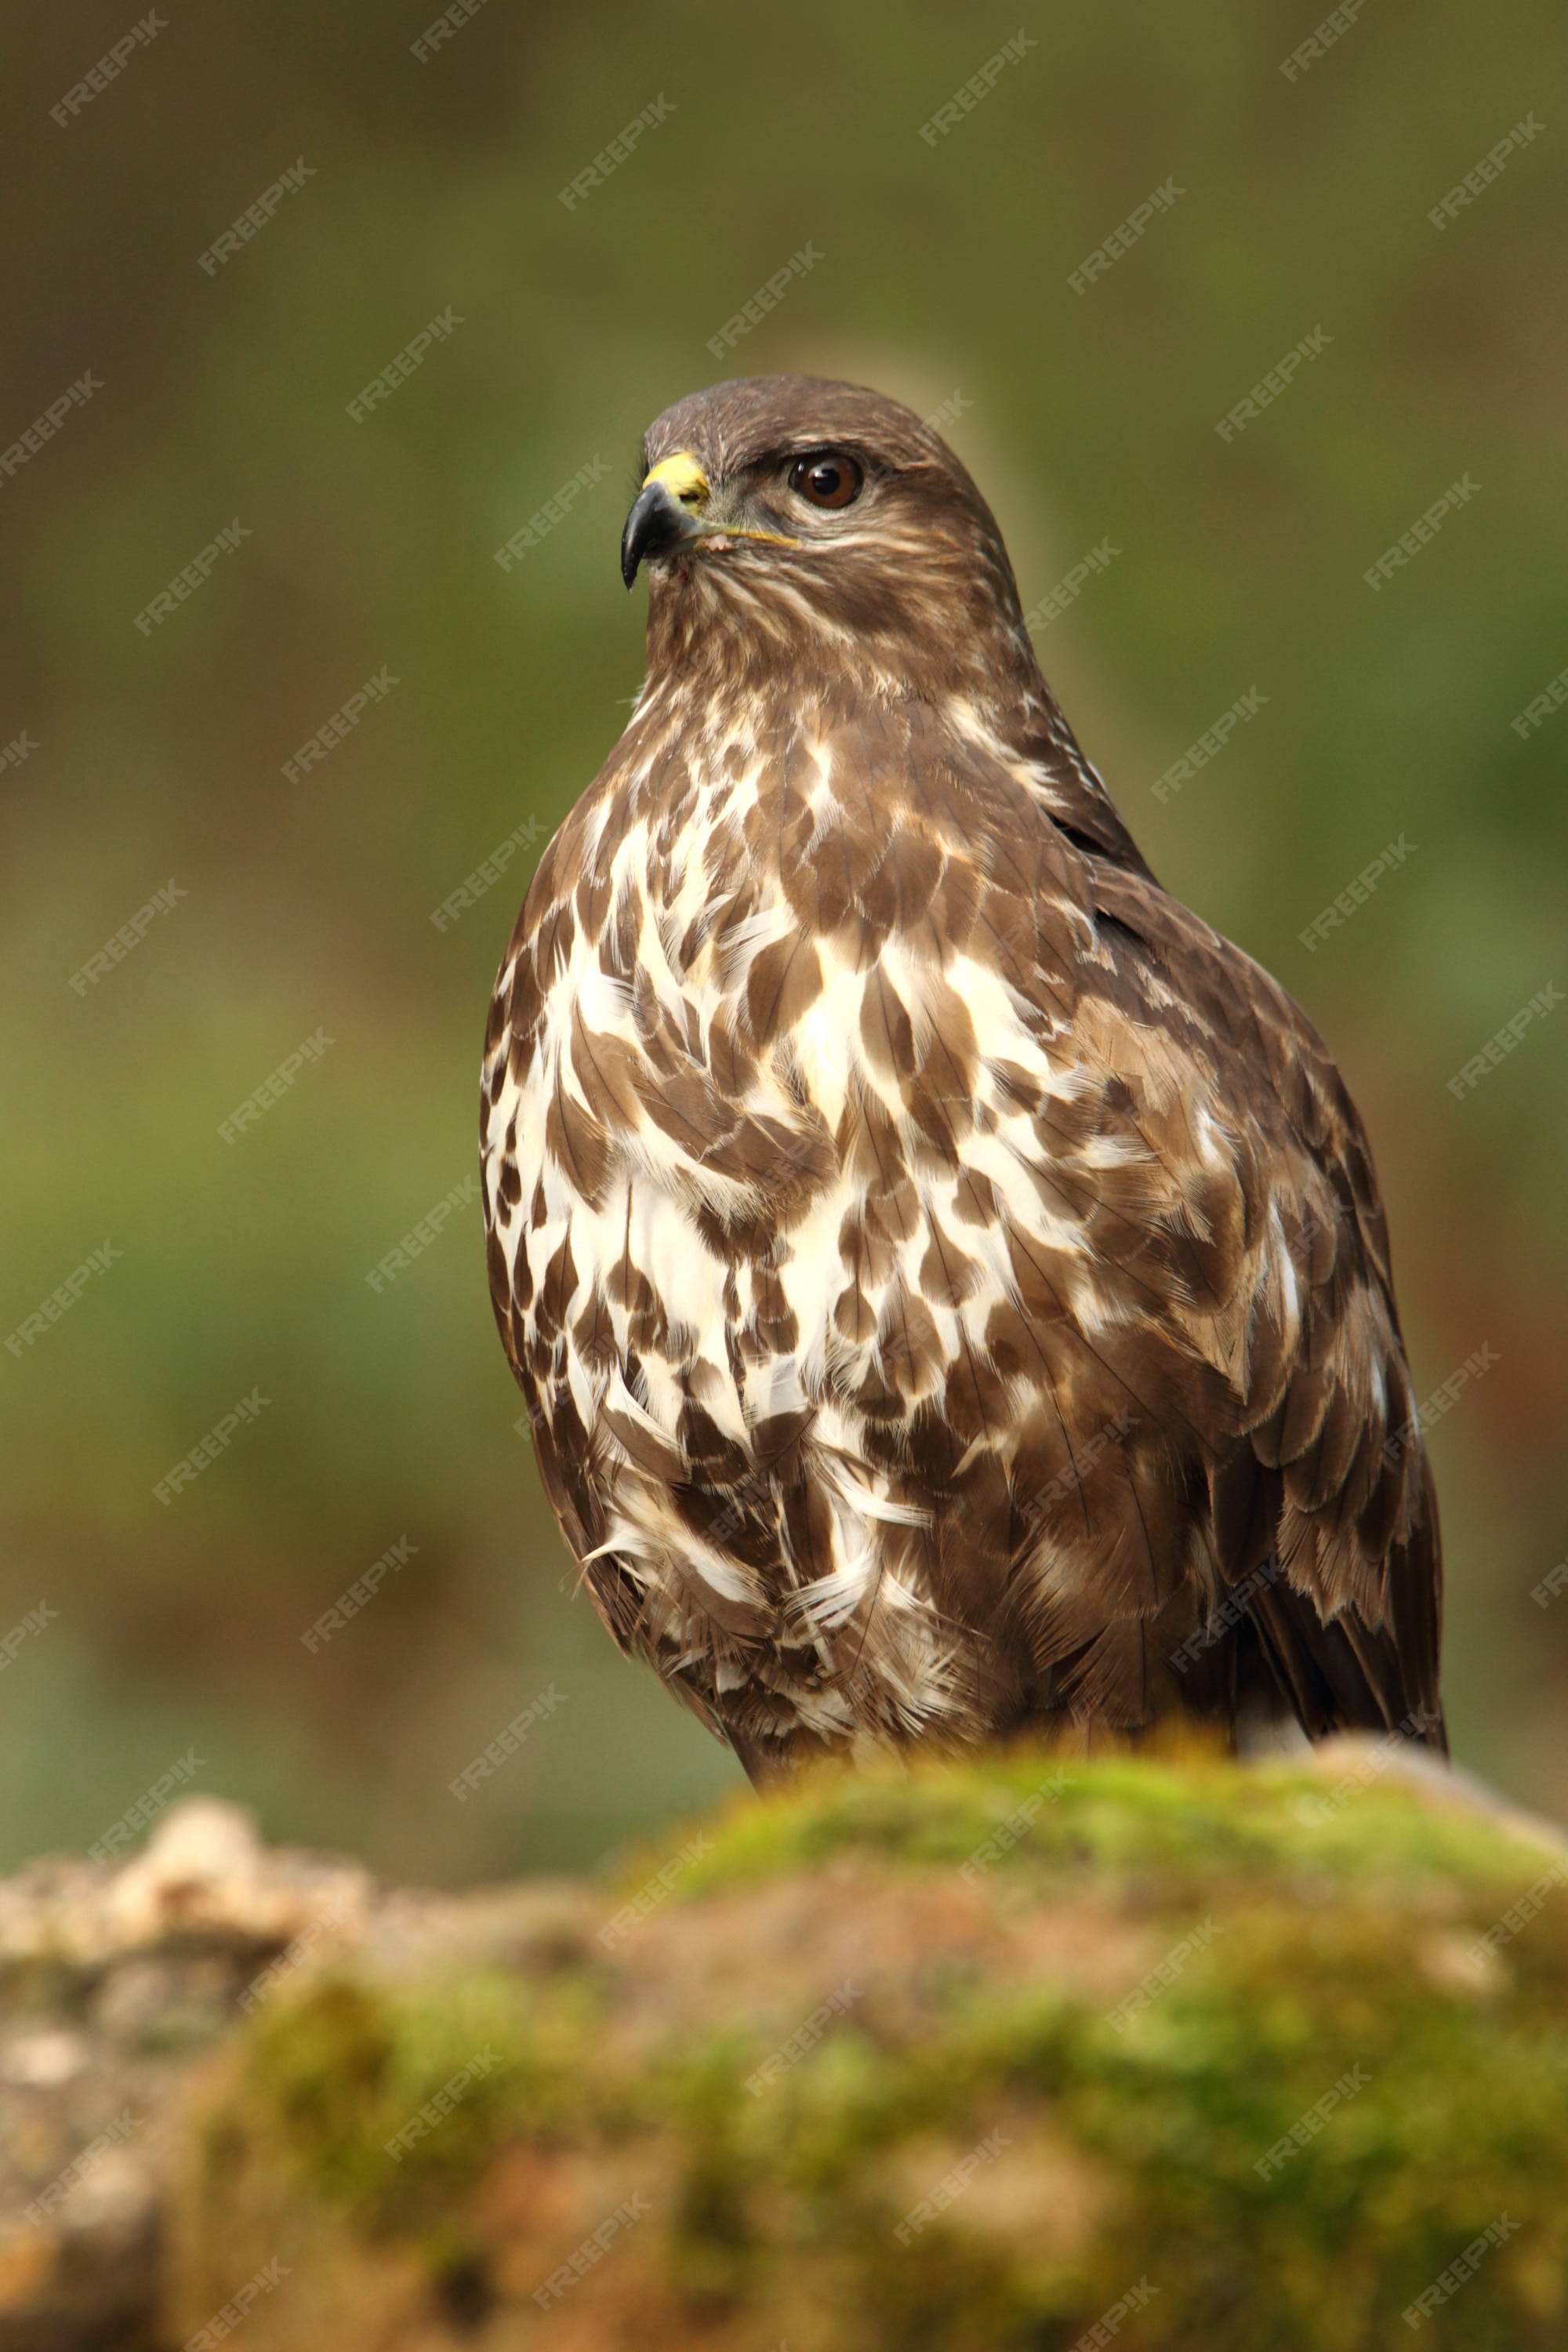 Avian Raptors Poster - the Birds of Prey: Hawk, Eagle, Buzzard, Falcon and  more.